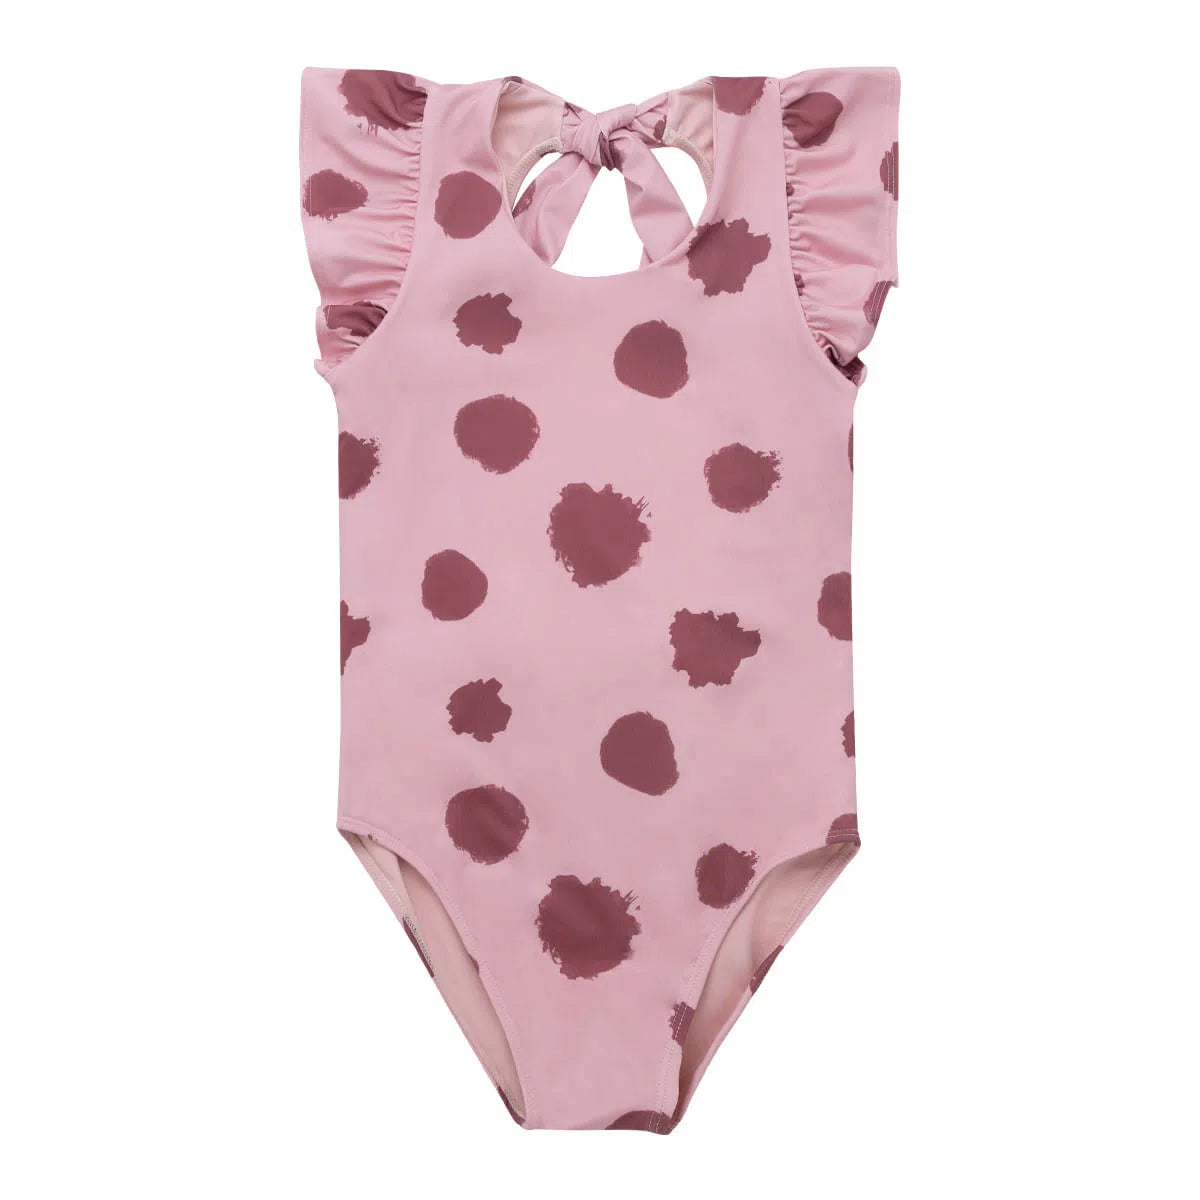 Pink Ruffle Swim Suit